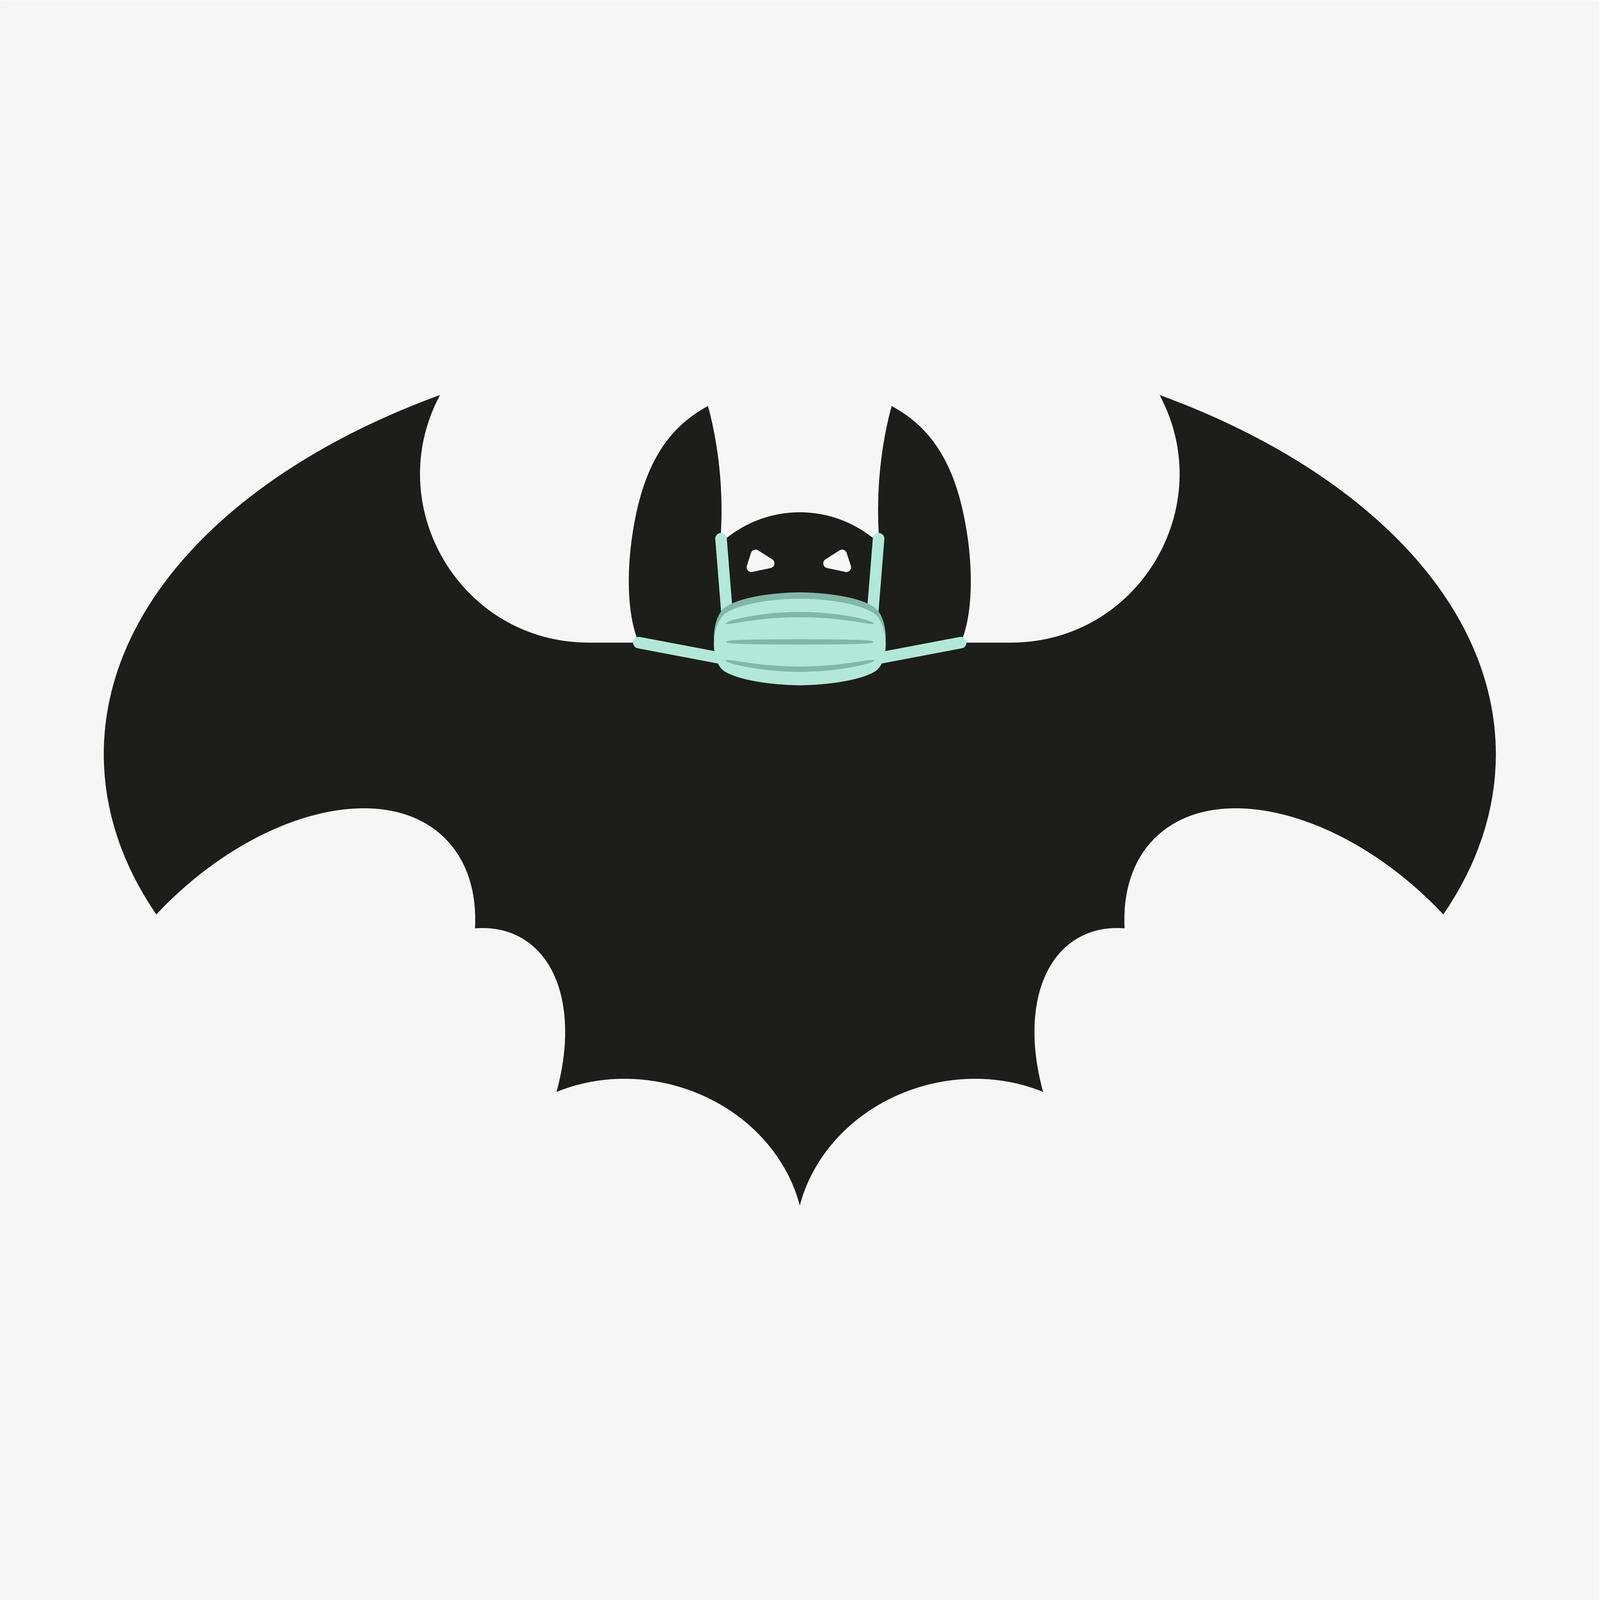 Vector illustration of a black bat with mask by AdamLapunik